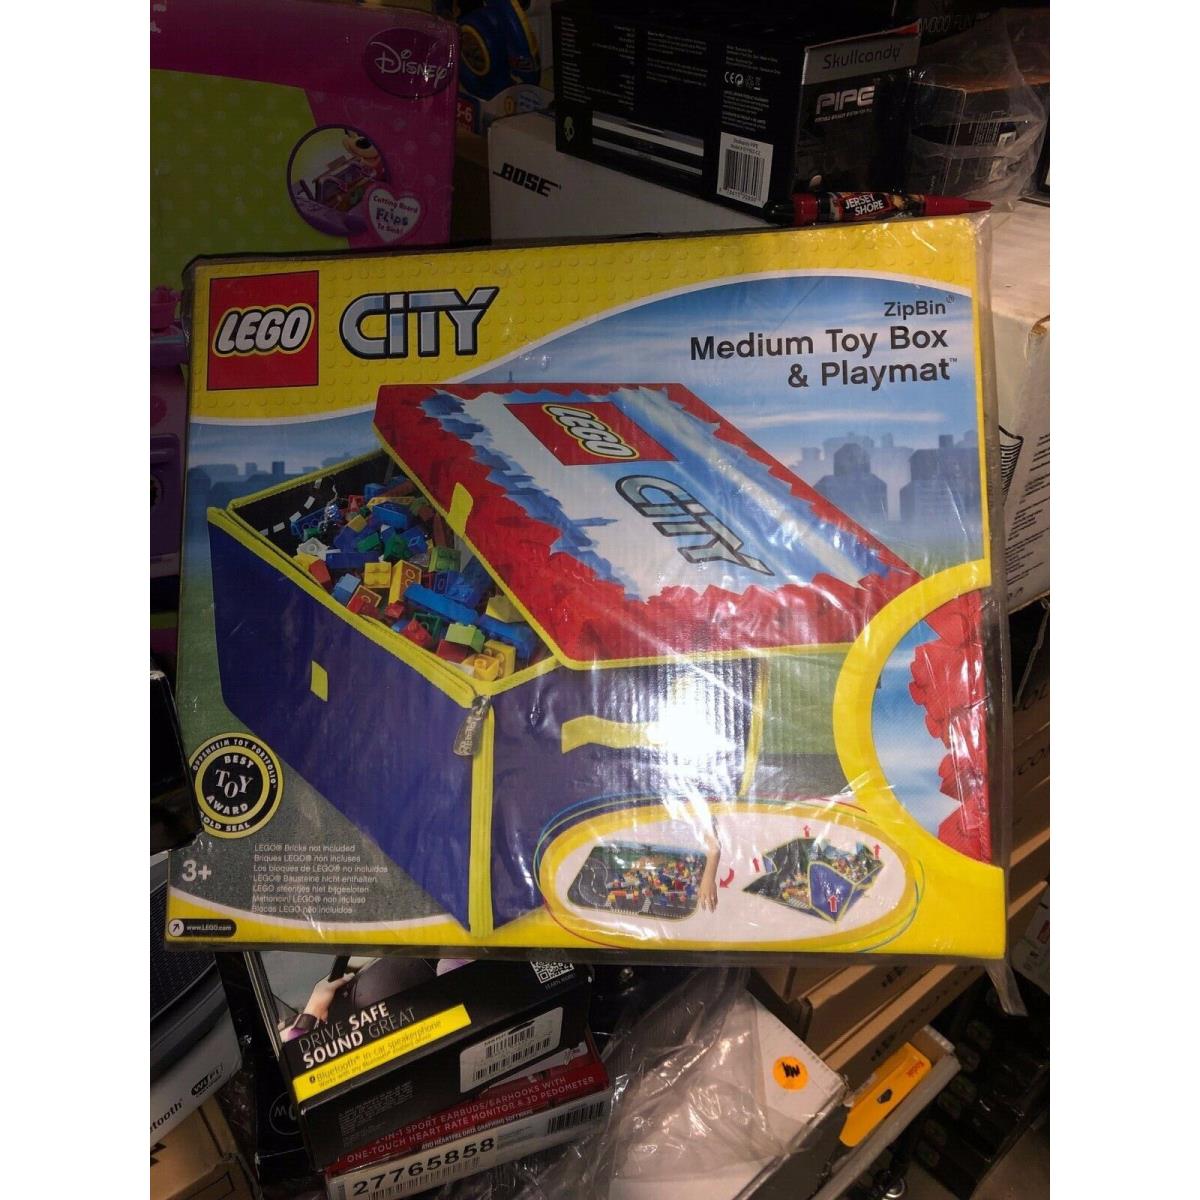 Lego City Medium Toy Box